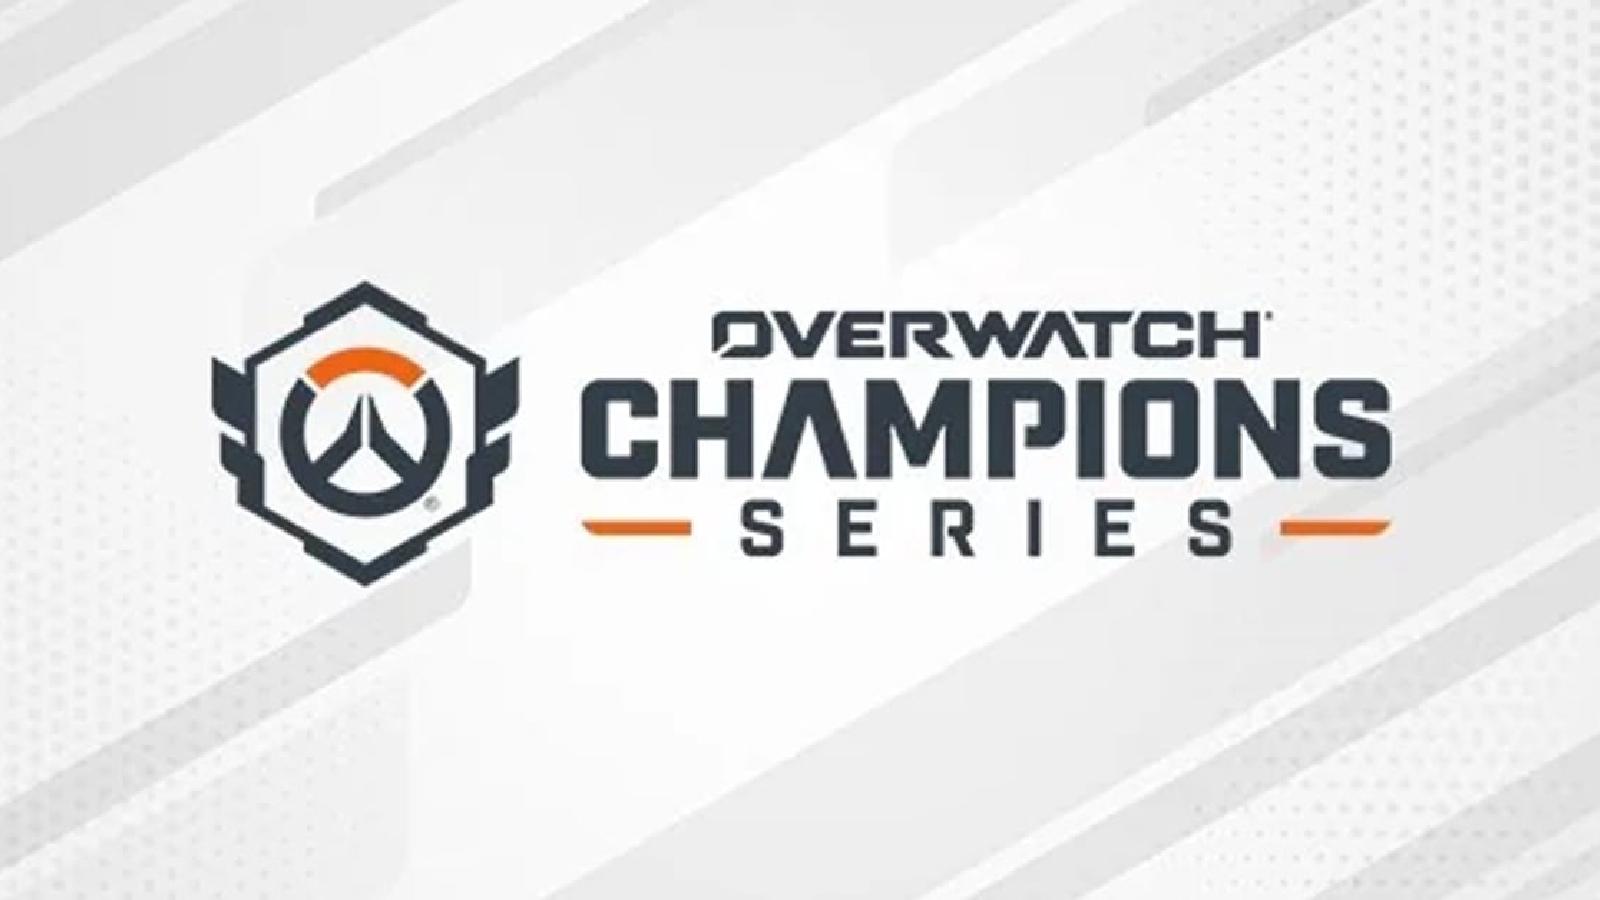 Overwatch Champions Series logo